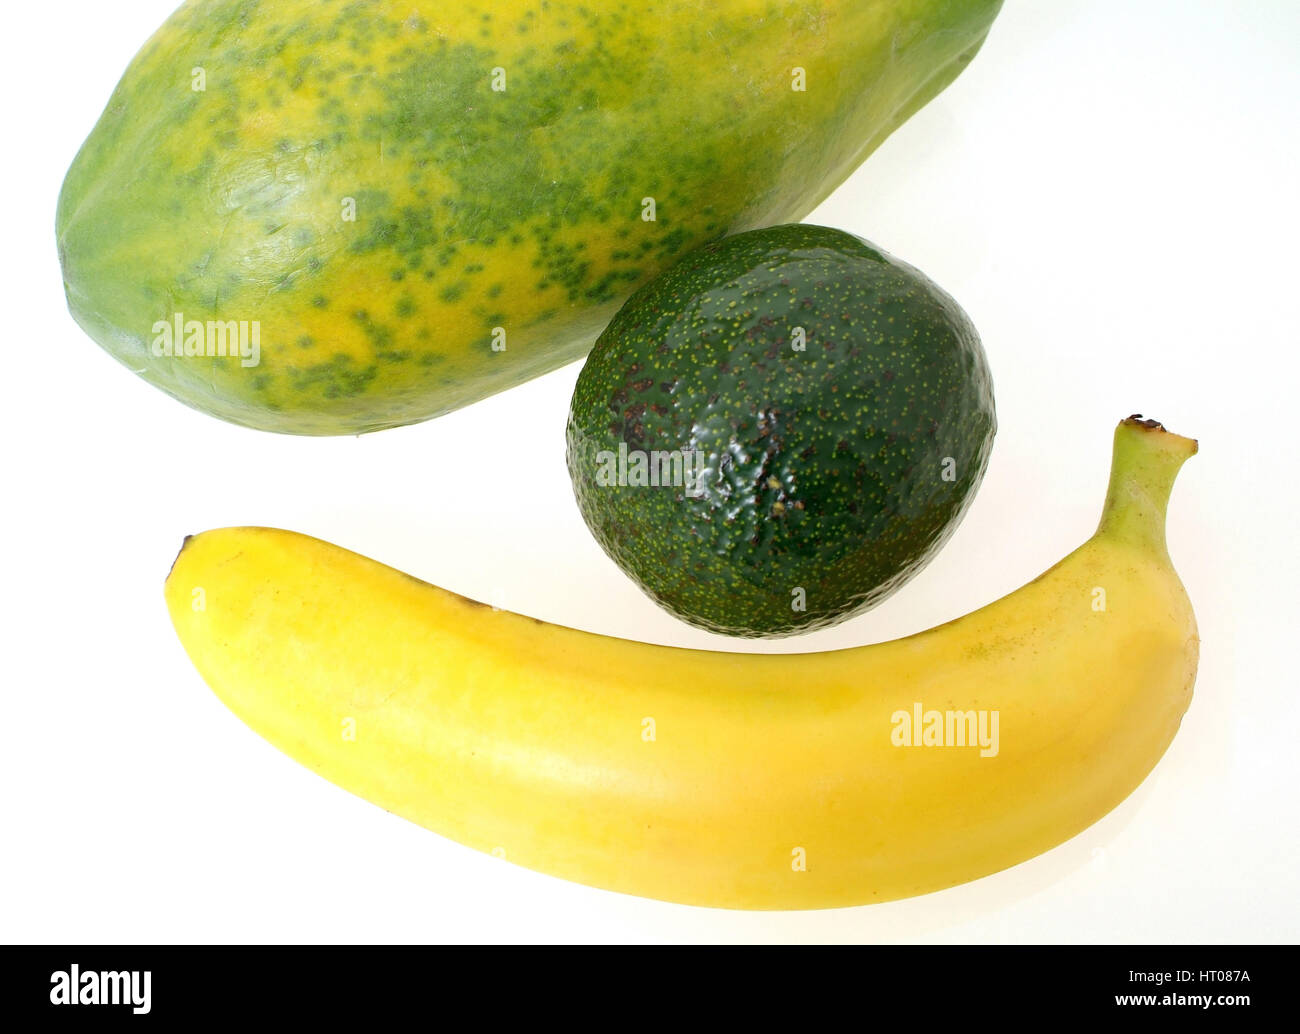 Papaya, Avocado und Banane - papaya, avocado and banana Stock Photo